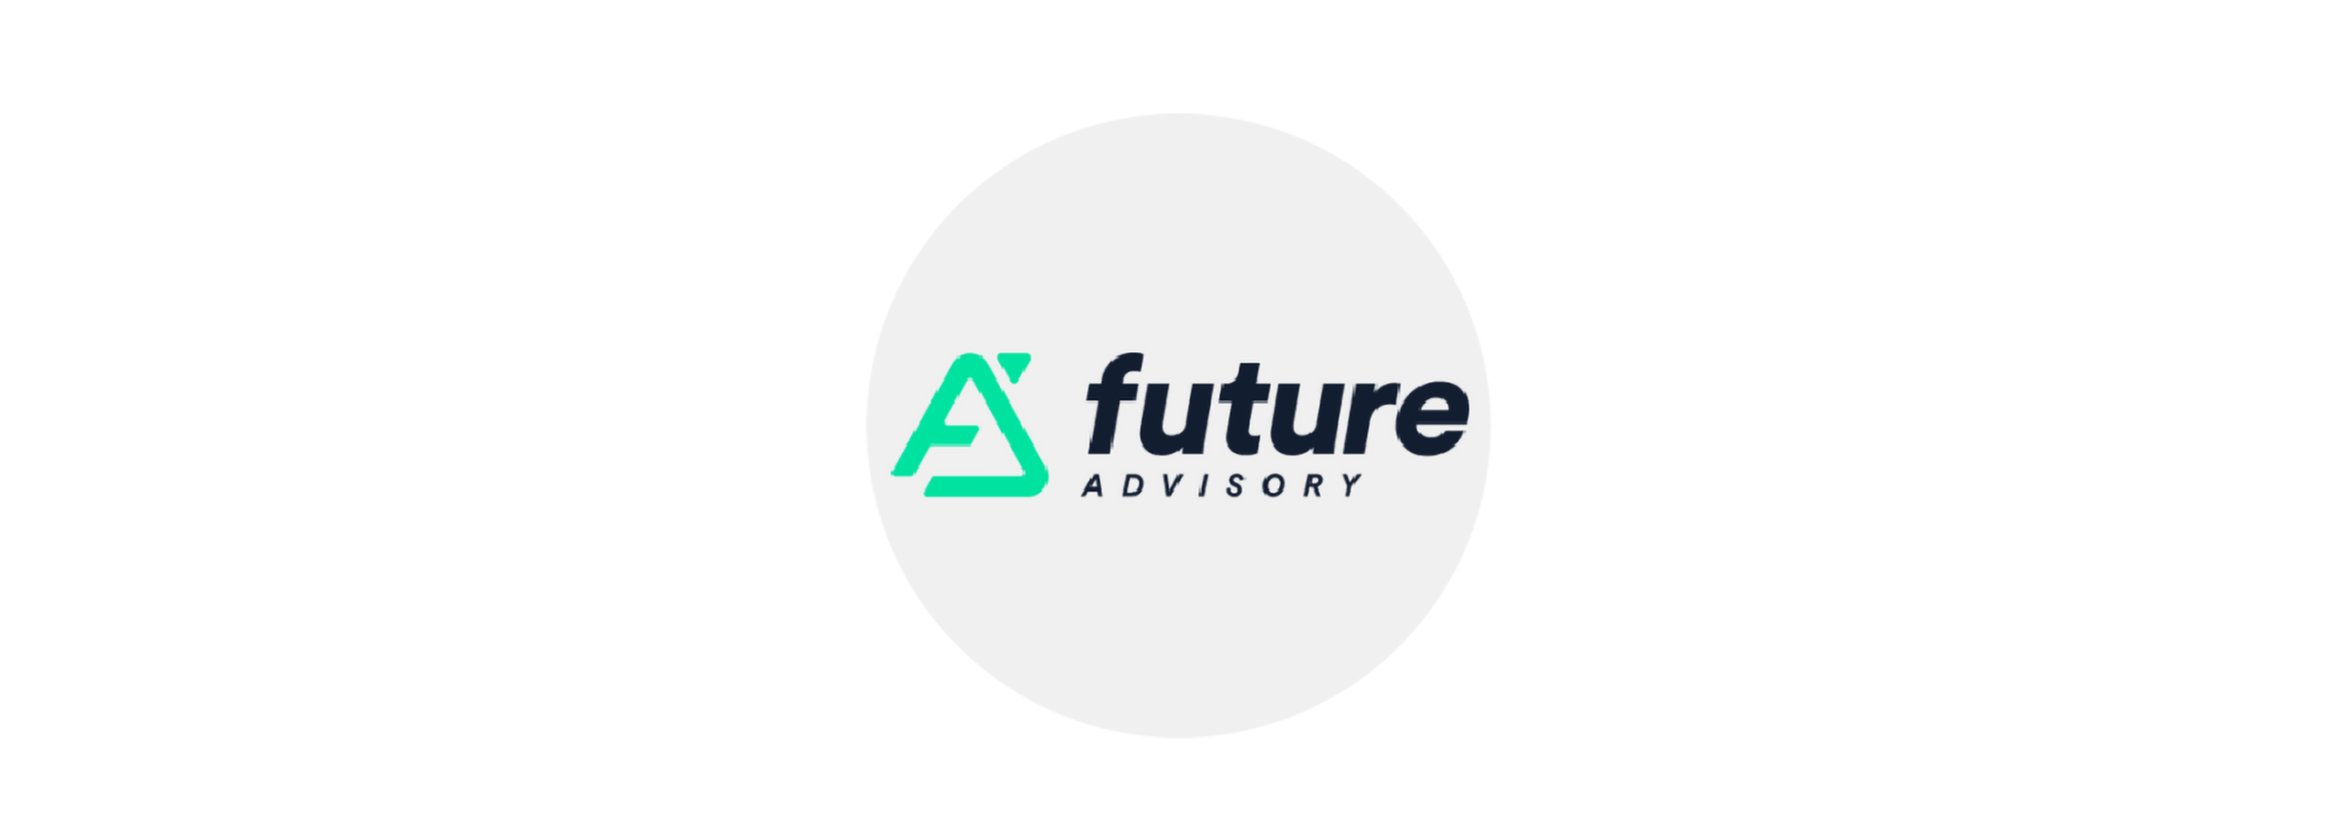 The Future Advisory logo